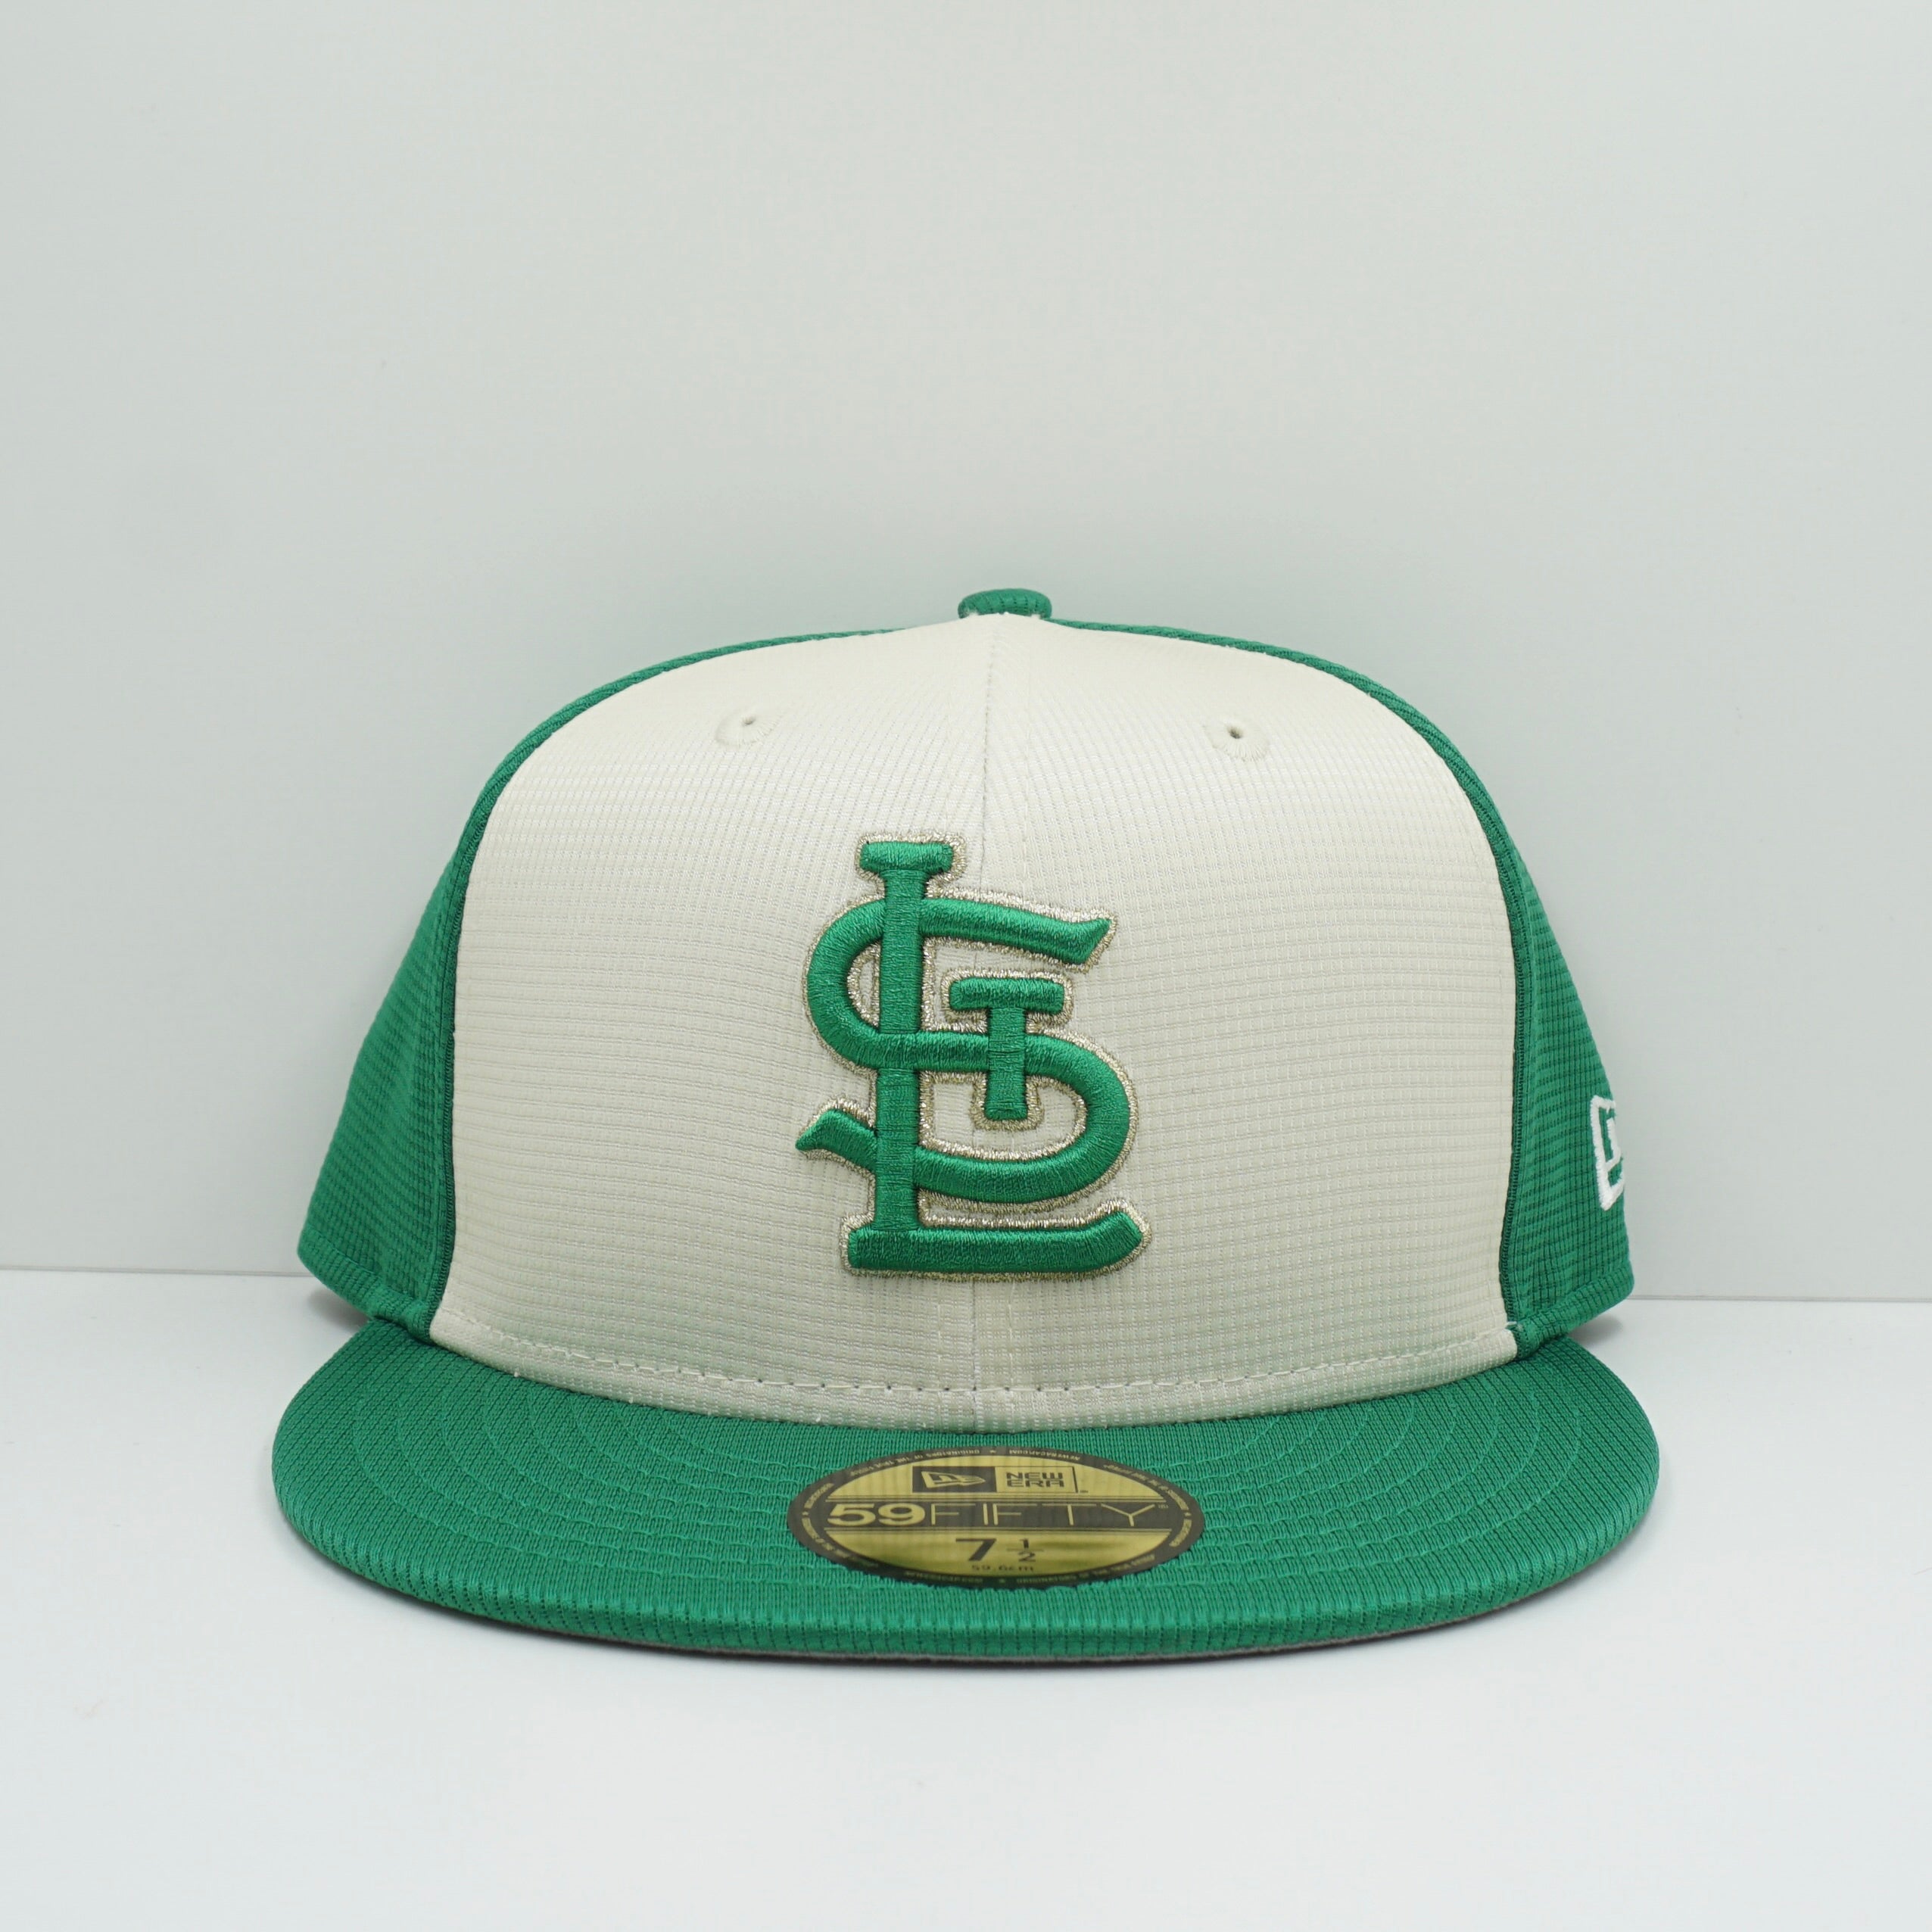 New Era St Louis Cardinals Green Fitted Cap